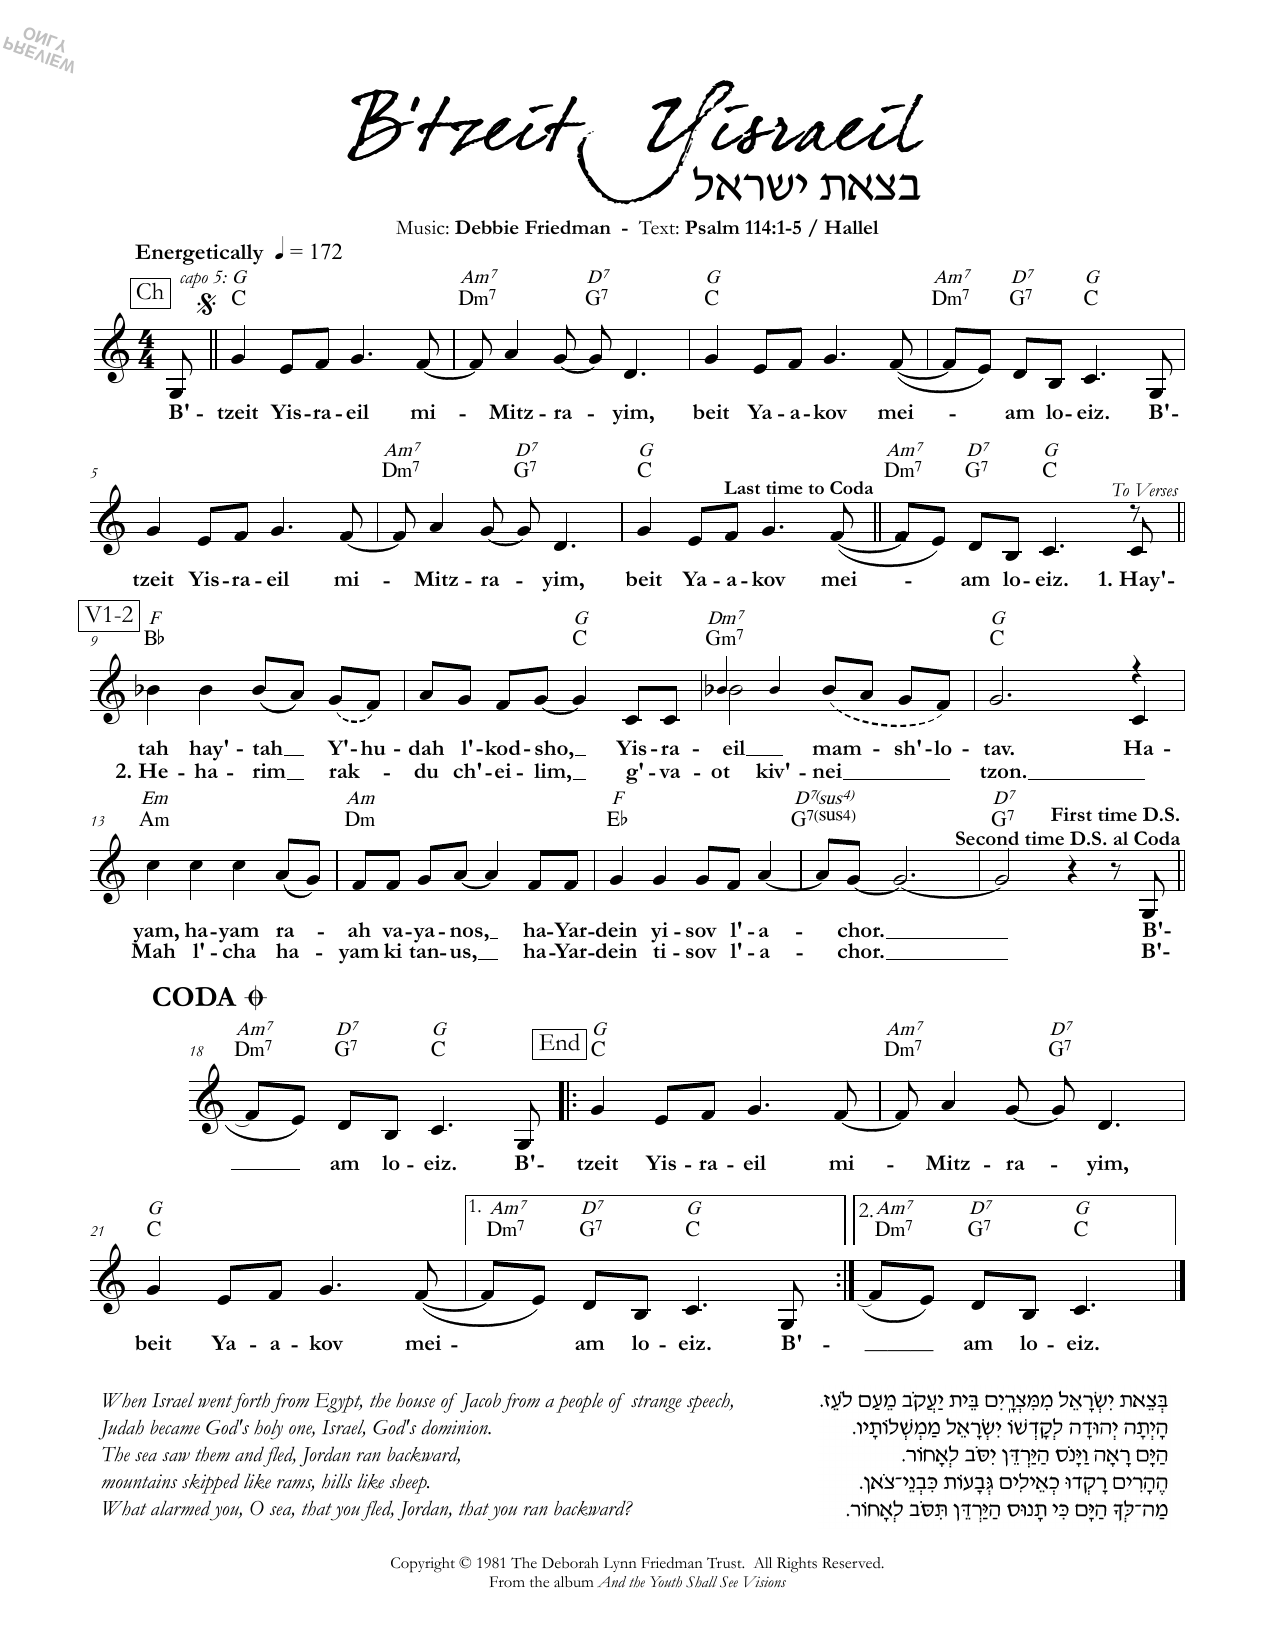 Download Debbie Friedman B'tzeit Yisraeil Sheet Music and learn how to play Lead Sheet / Fake Book PDF digital score in minutes